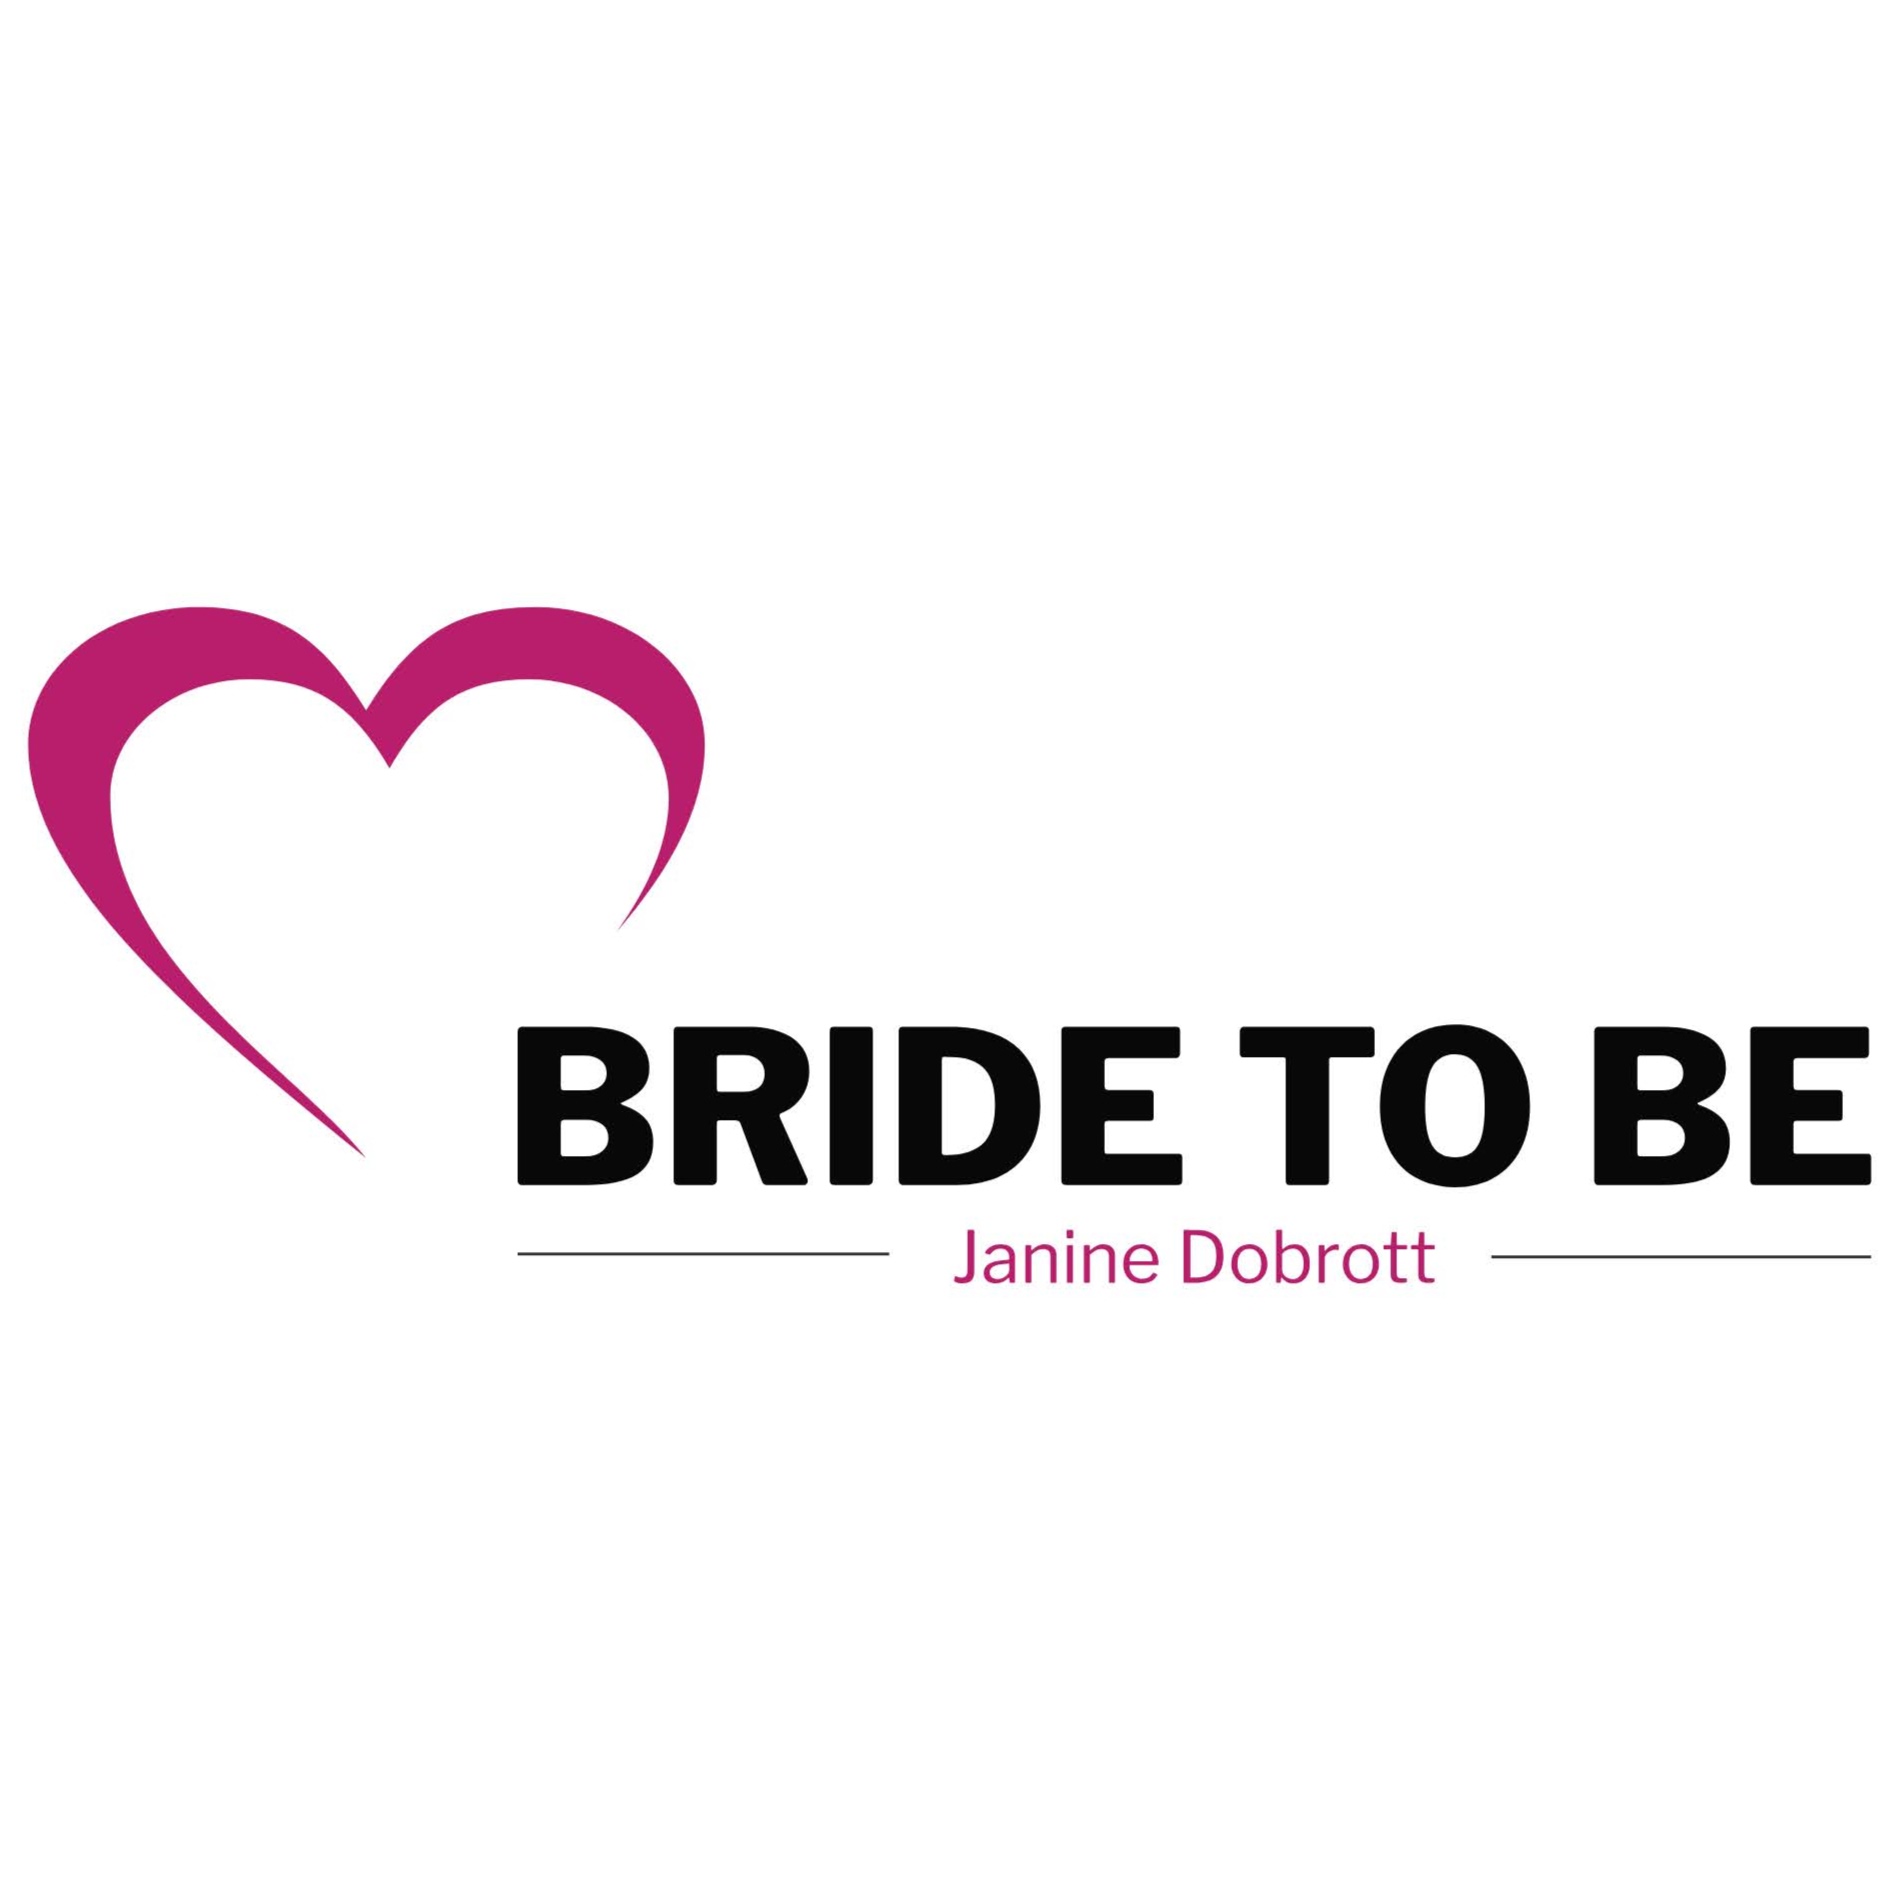 Bride to be - Janine Dobrott Logo